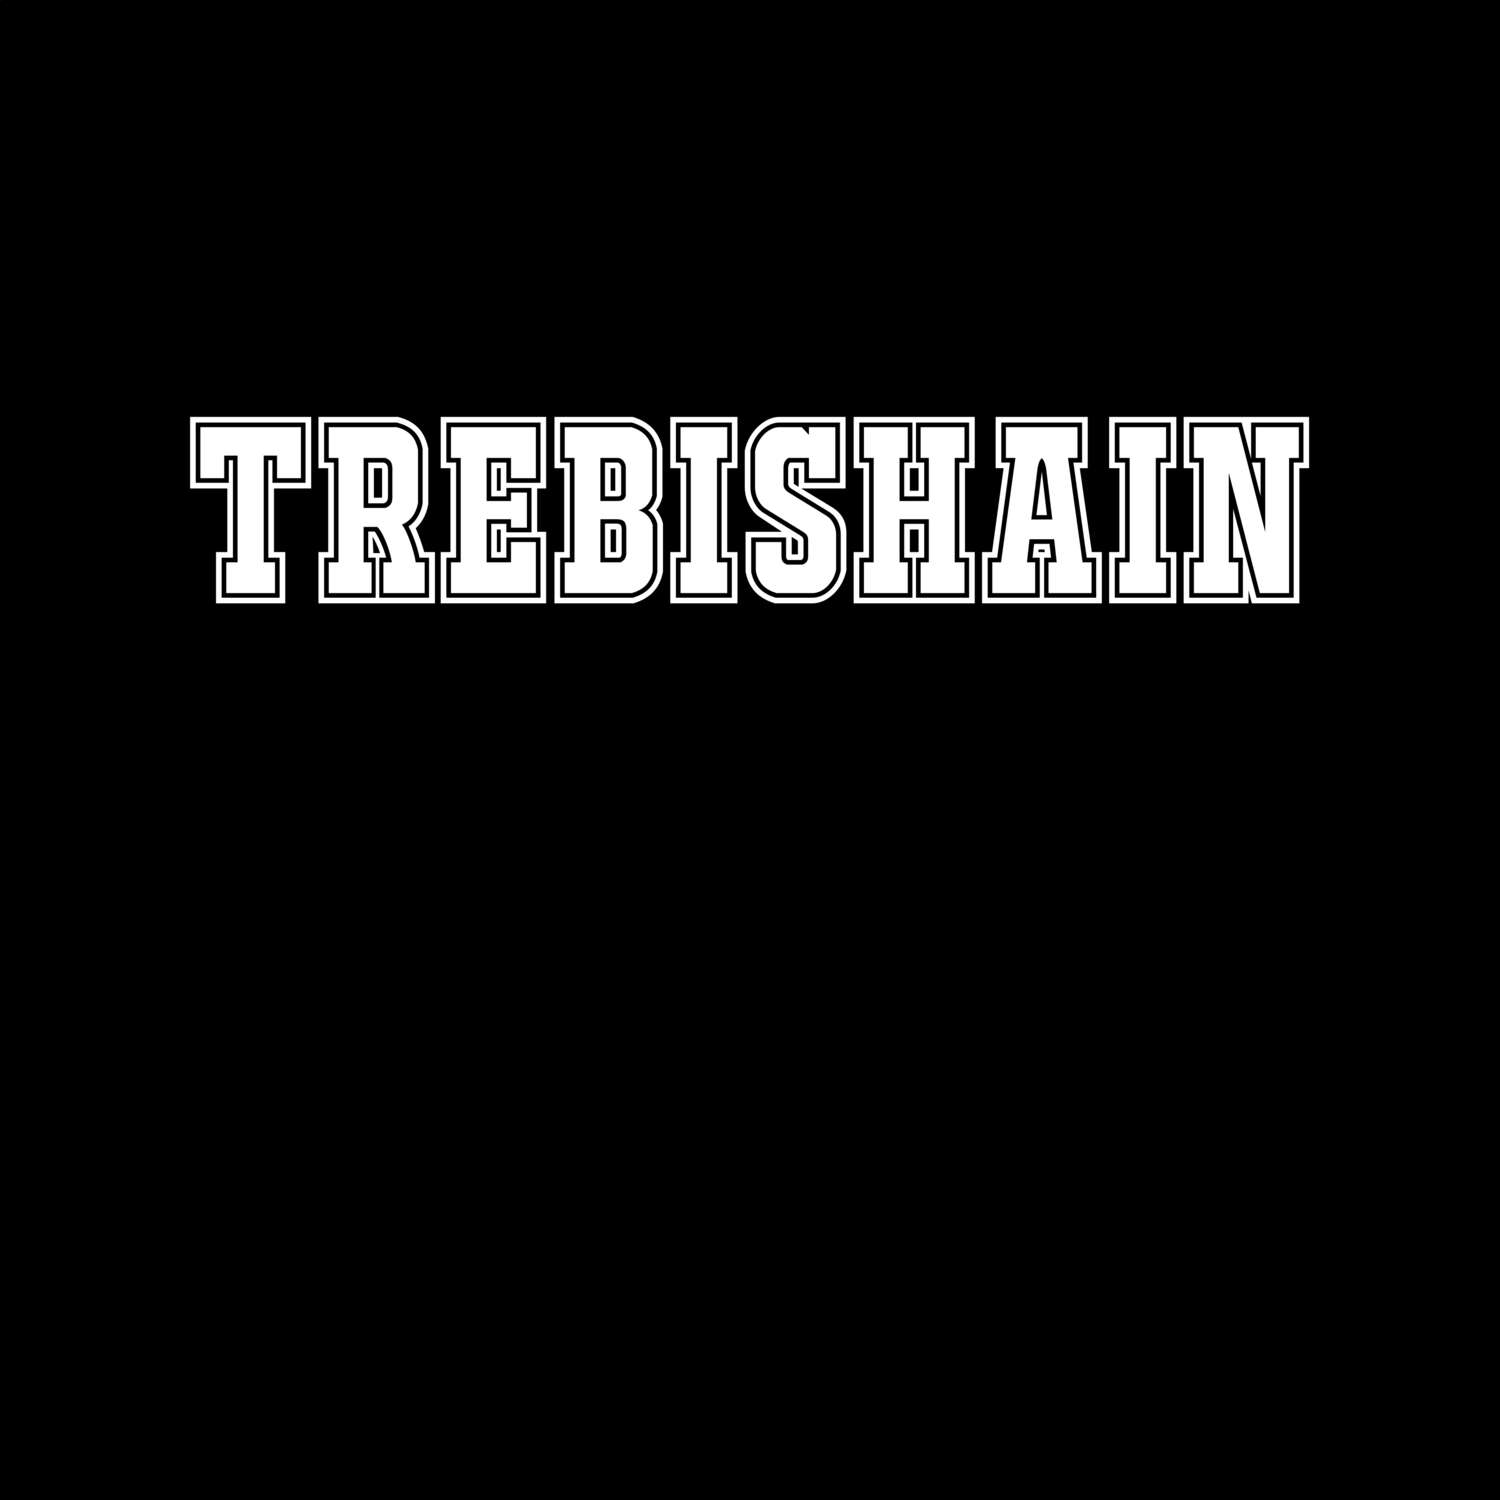 Trebishain T-Shirt »Classic«